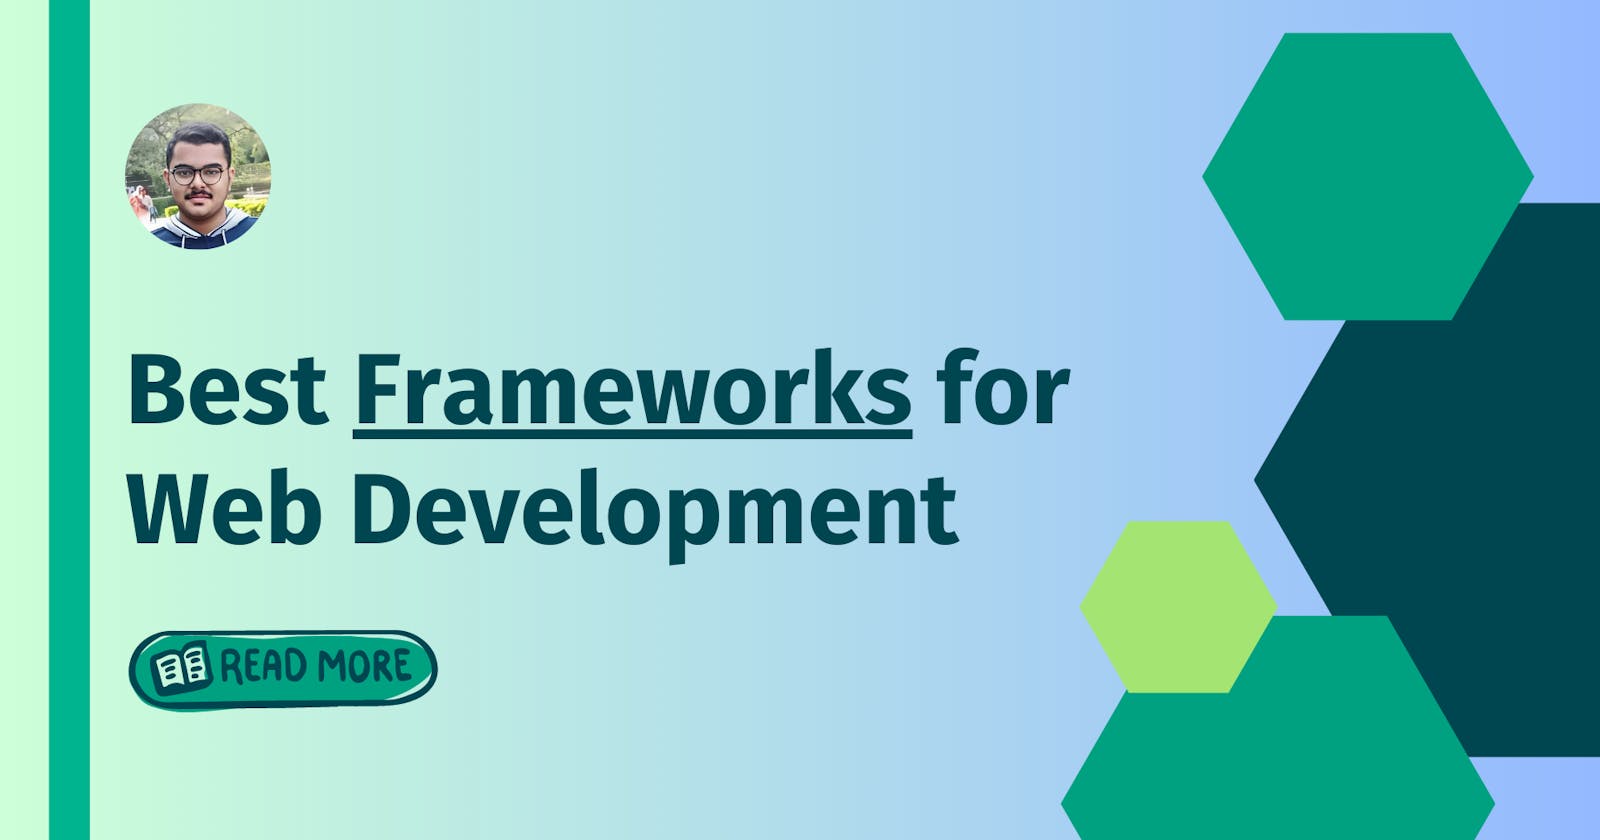 Best Frameworks to use for Web Development